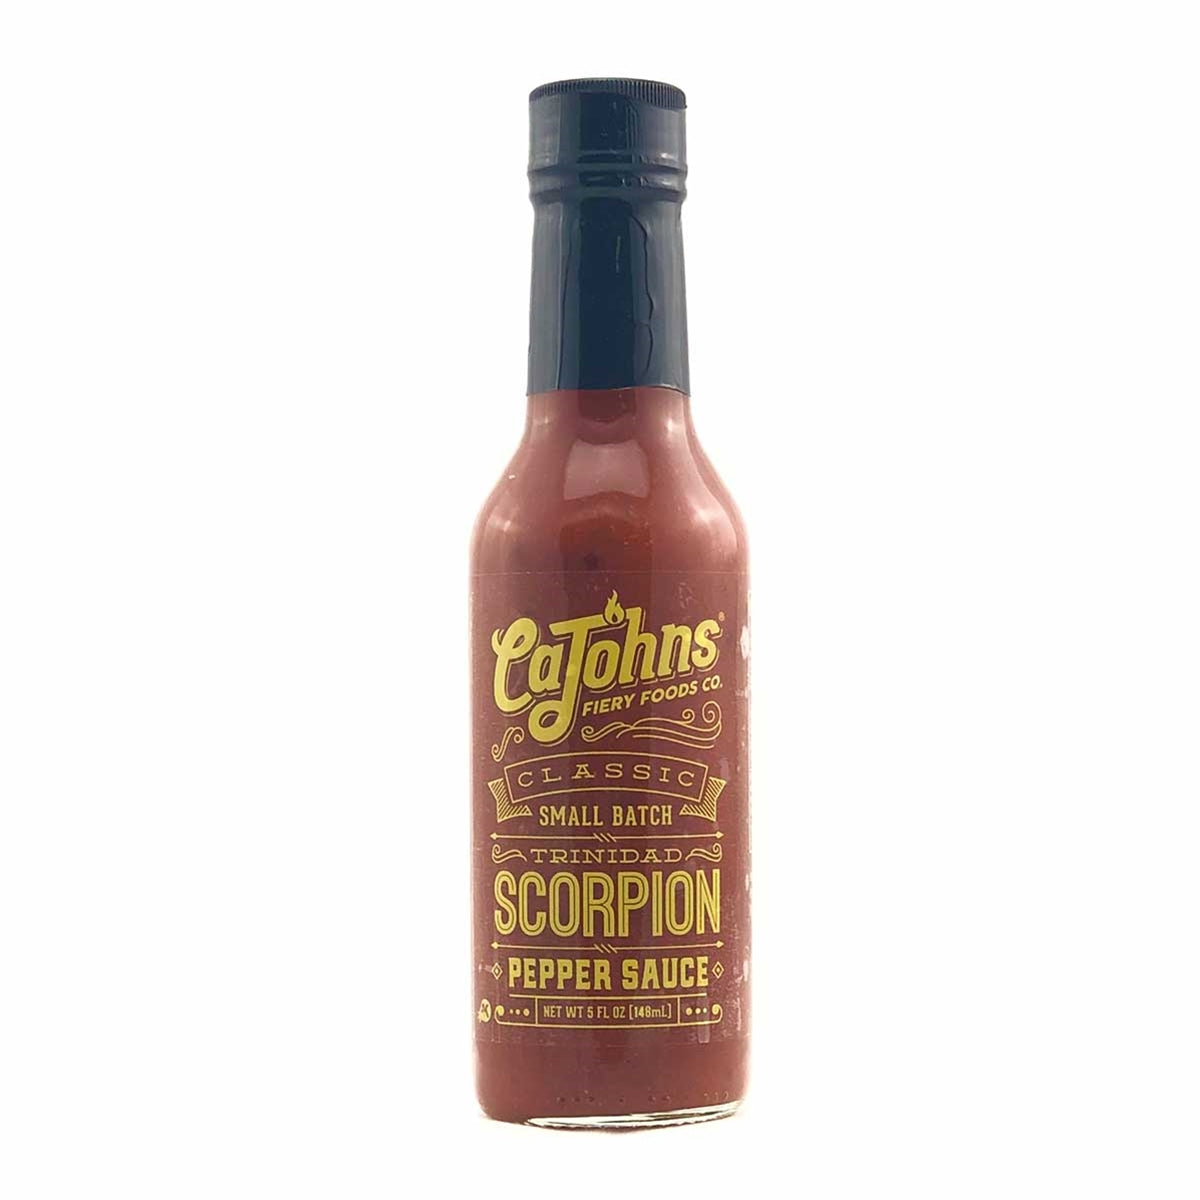 Cajohn's Classic Trinindad Scorpion Hot Sauce